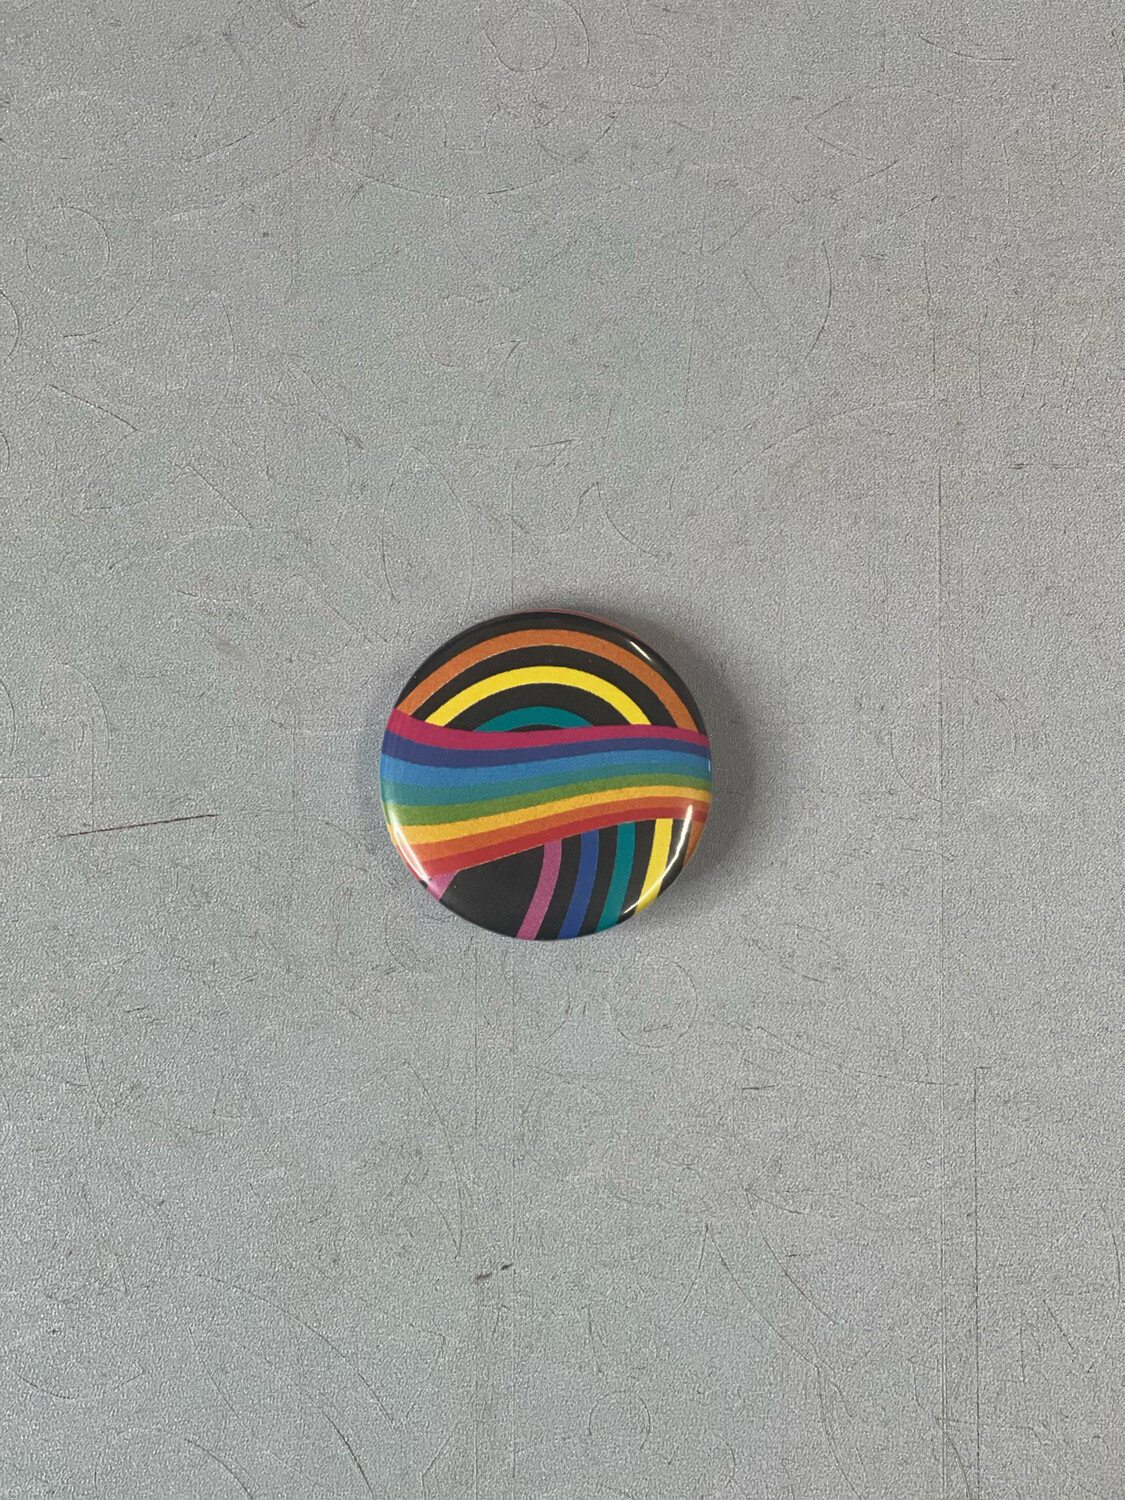 Double Rainbow Button